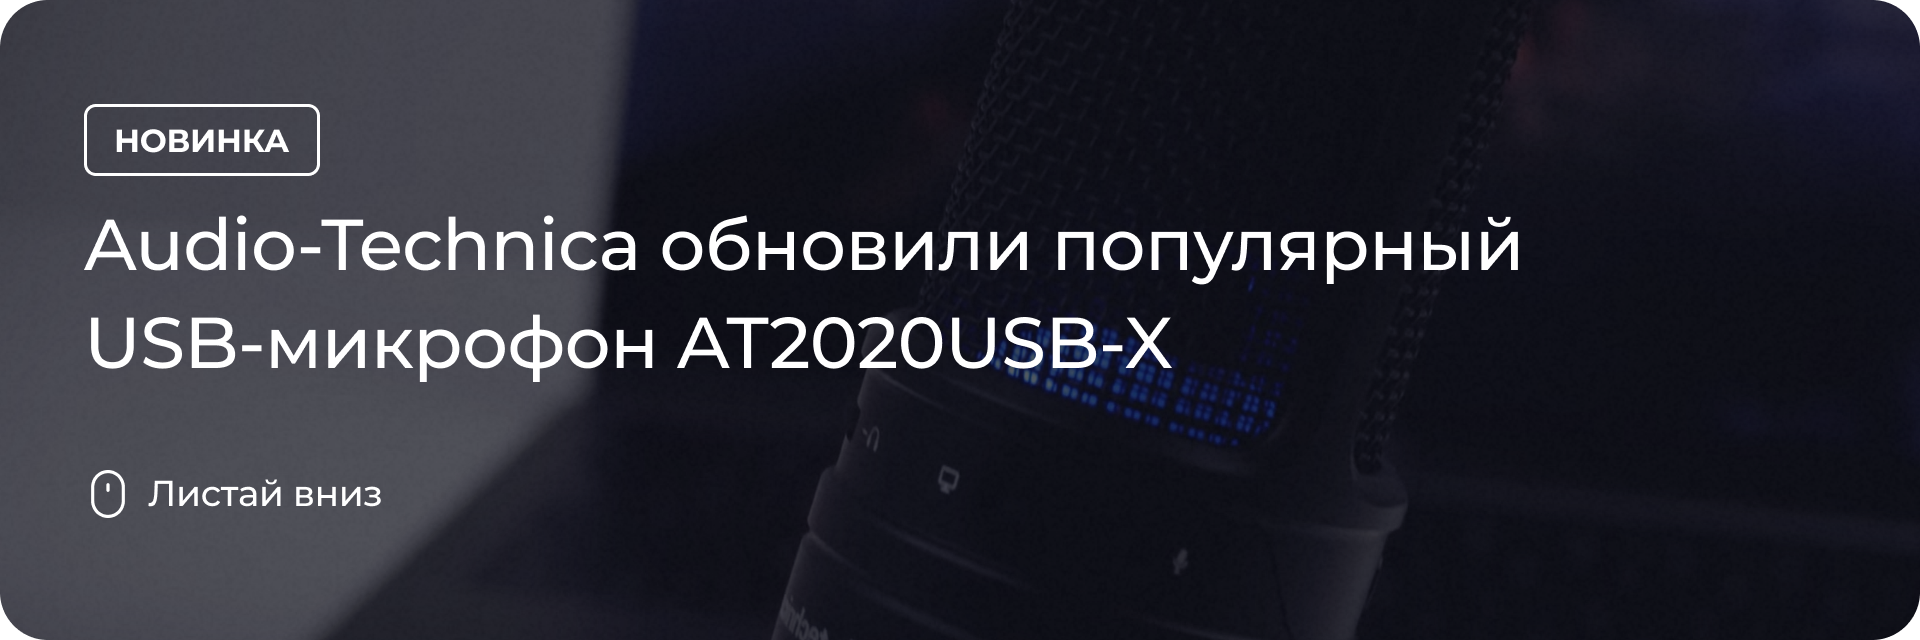 Audio-Technica обновили популярный USB-микрофон AT2020USB-X